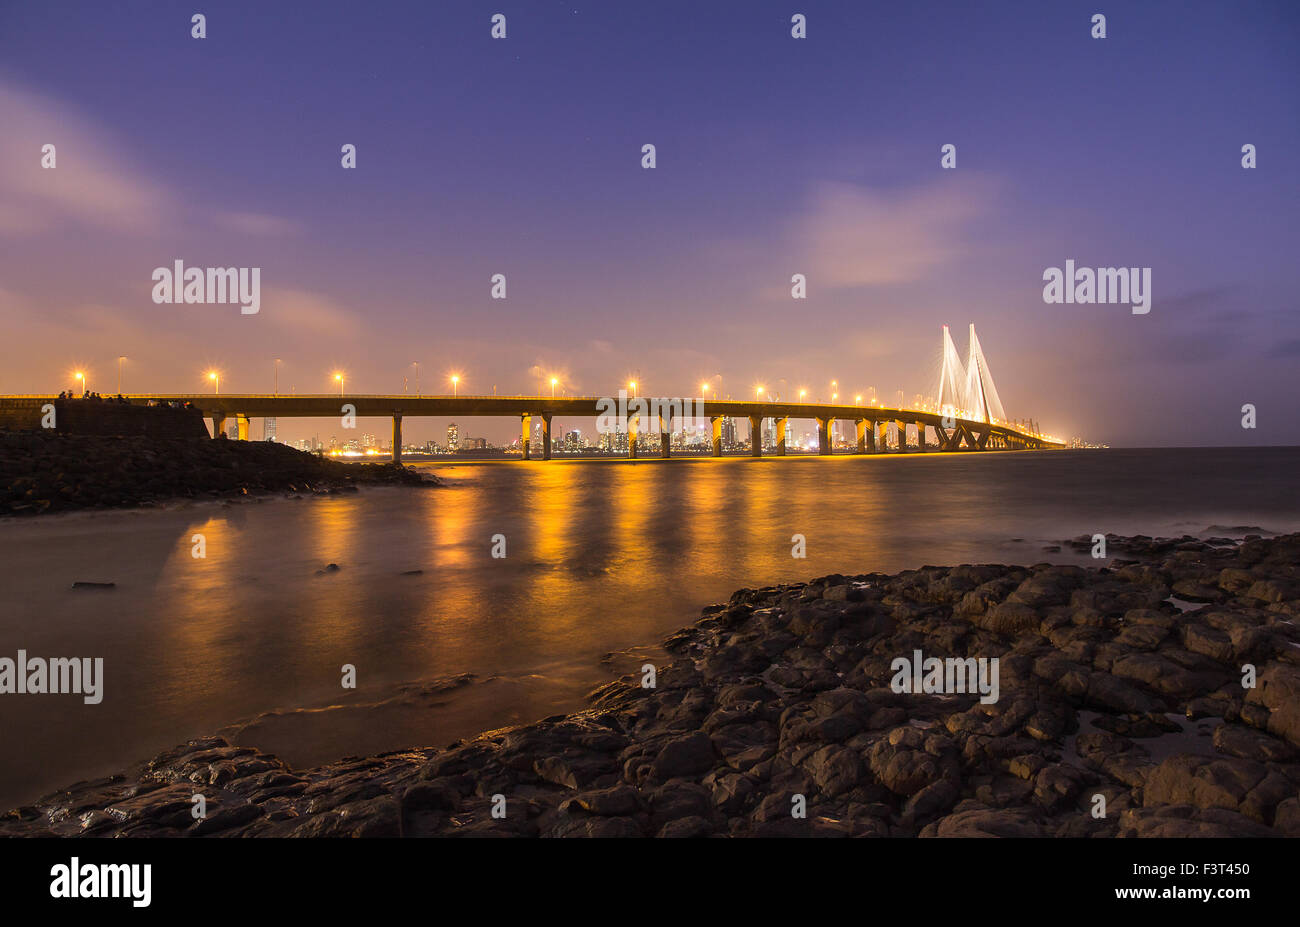 The Bandra – Worli Sea Link, sea bridge that connects Western Suburbs of Mumbai with Worli in South Mumbai. Stock Photo